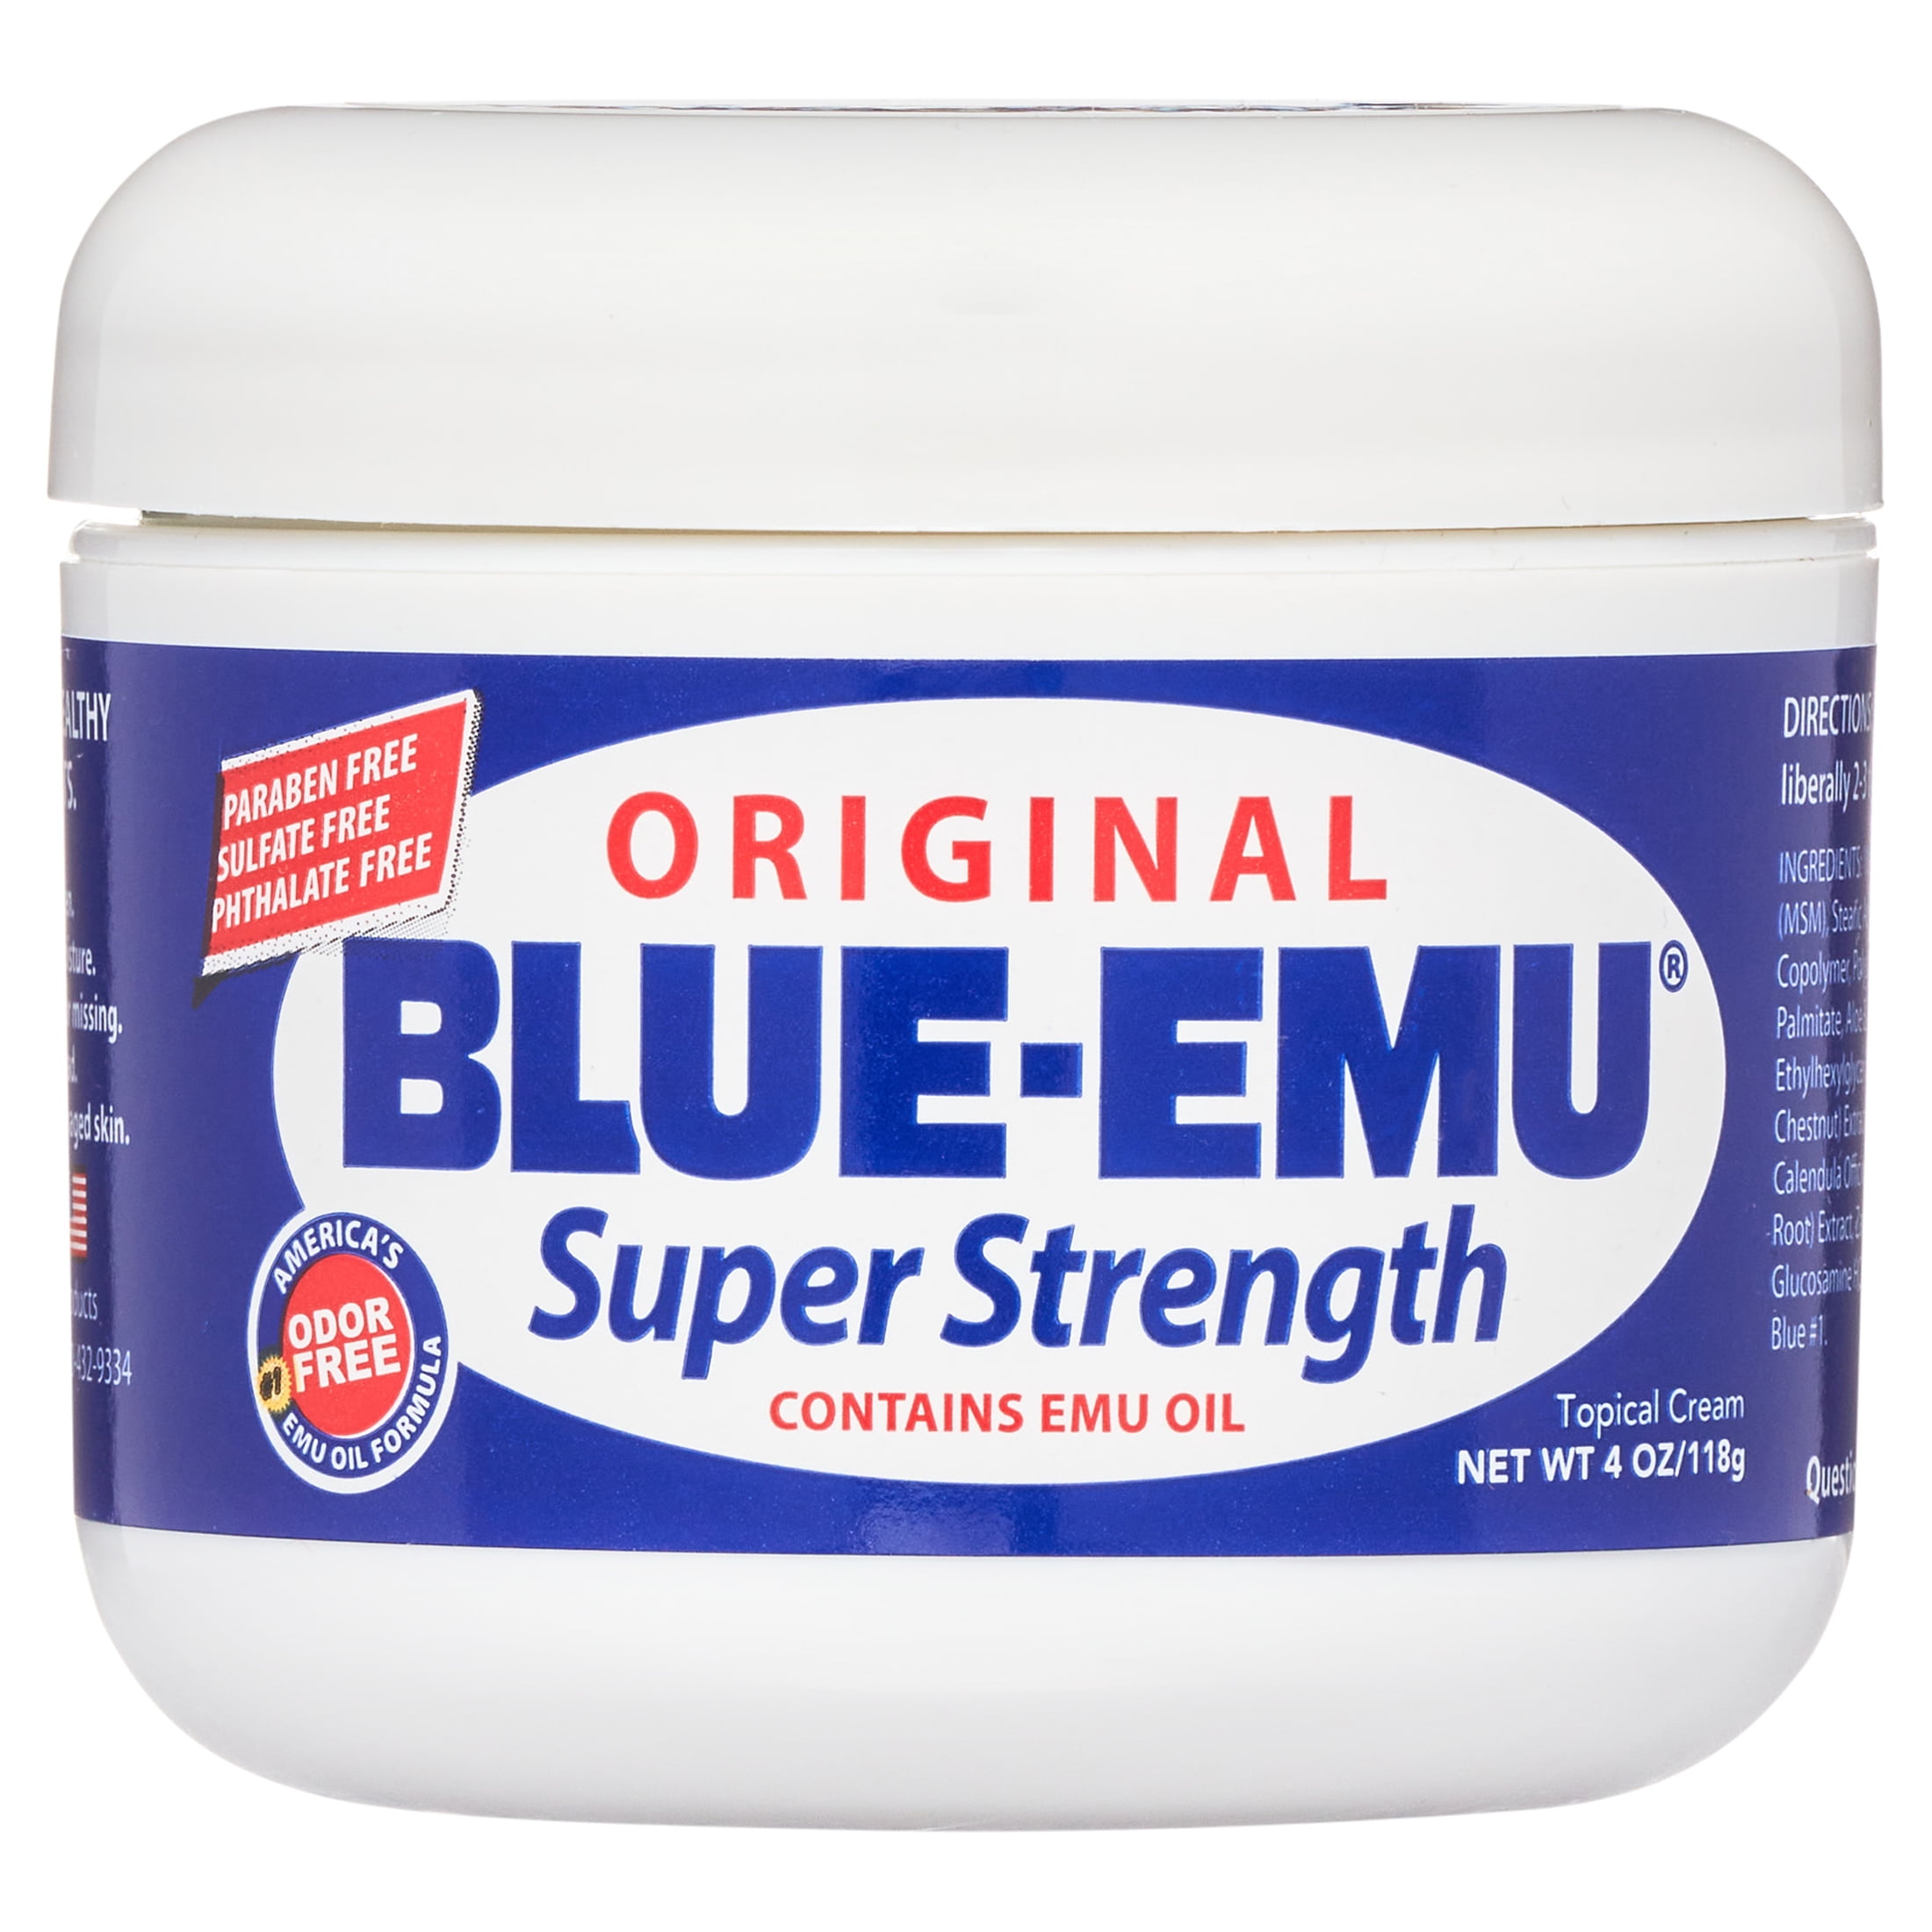 Blue Emu Original Analgesic Cream